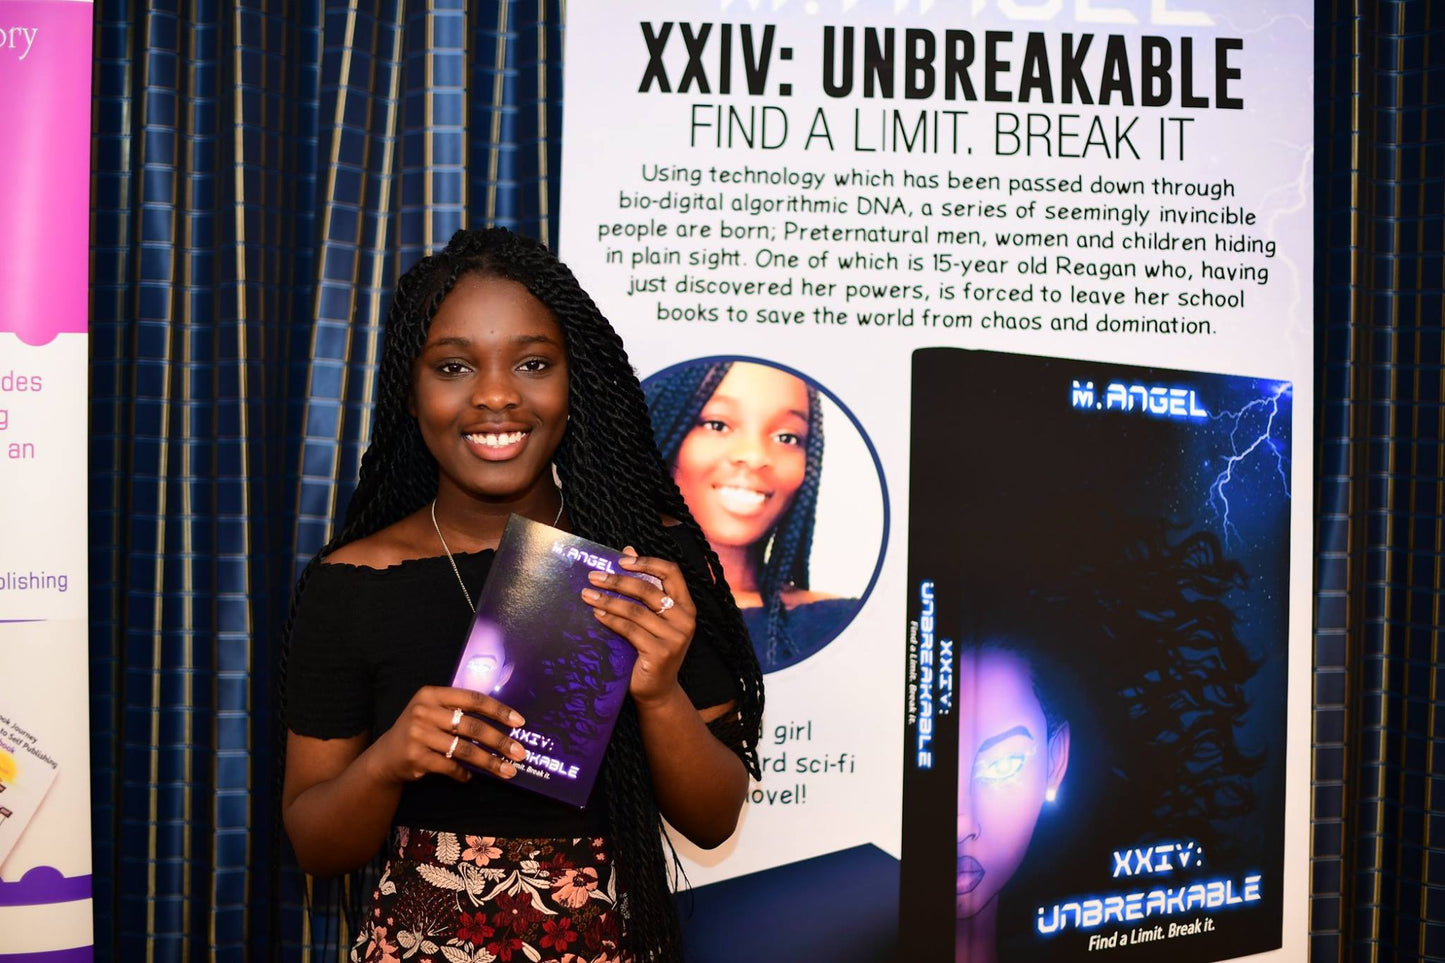 XXIV: Unbreakable